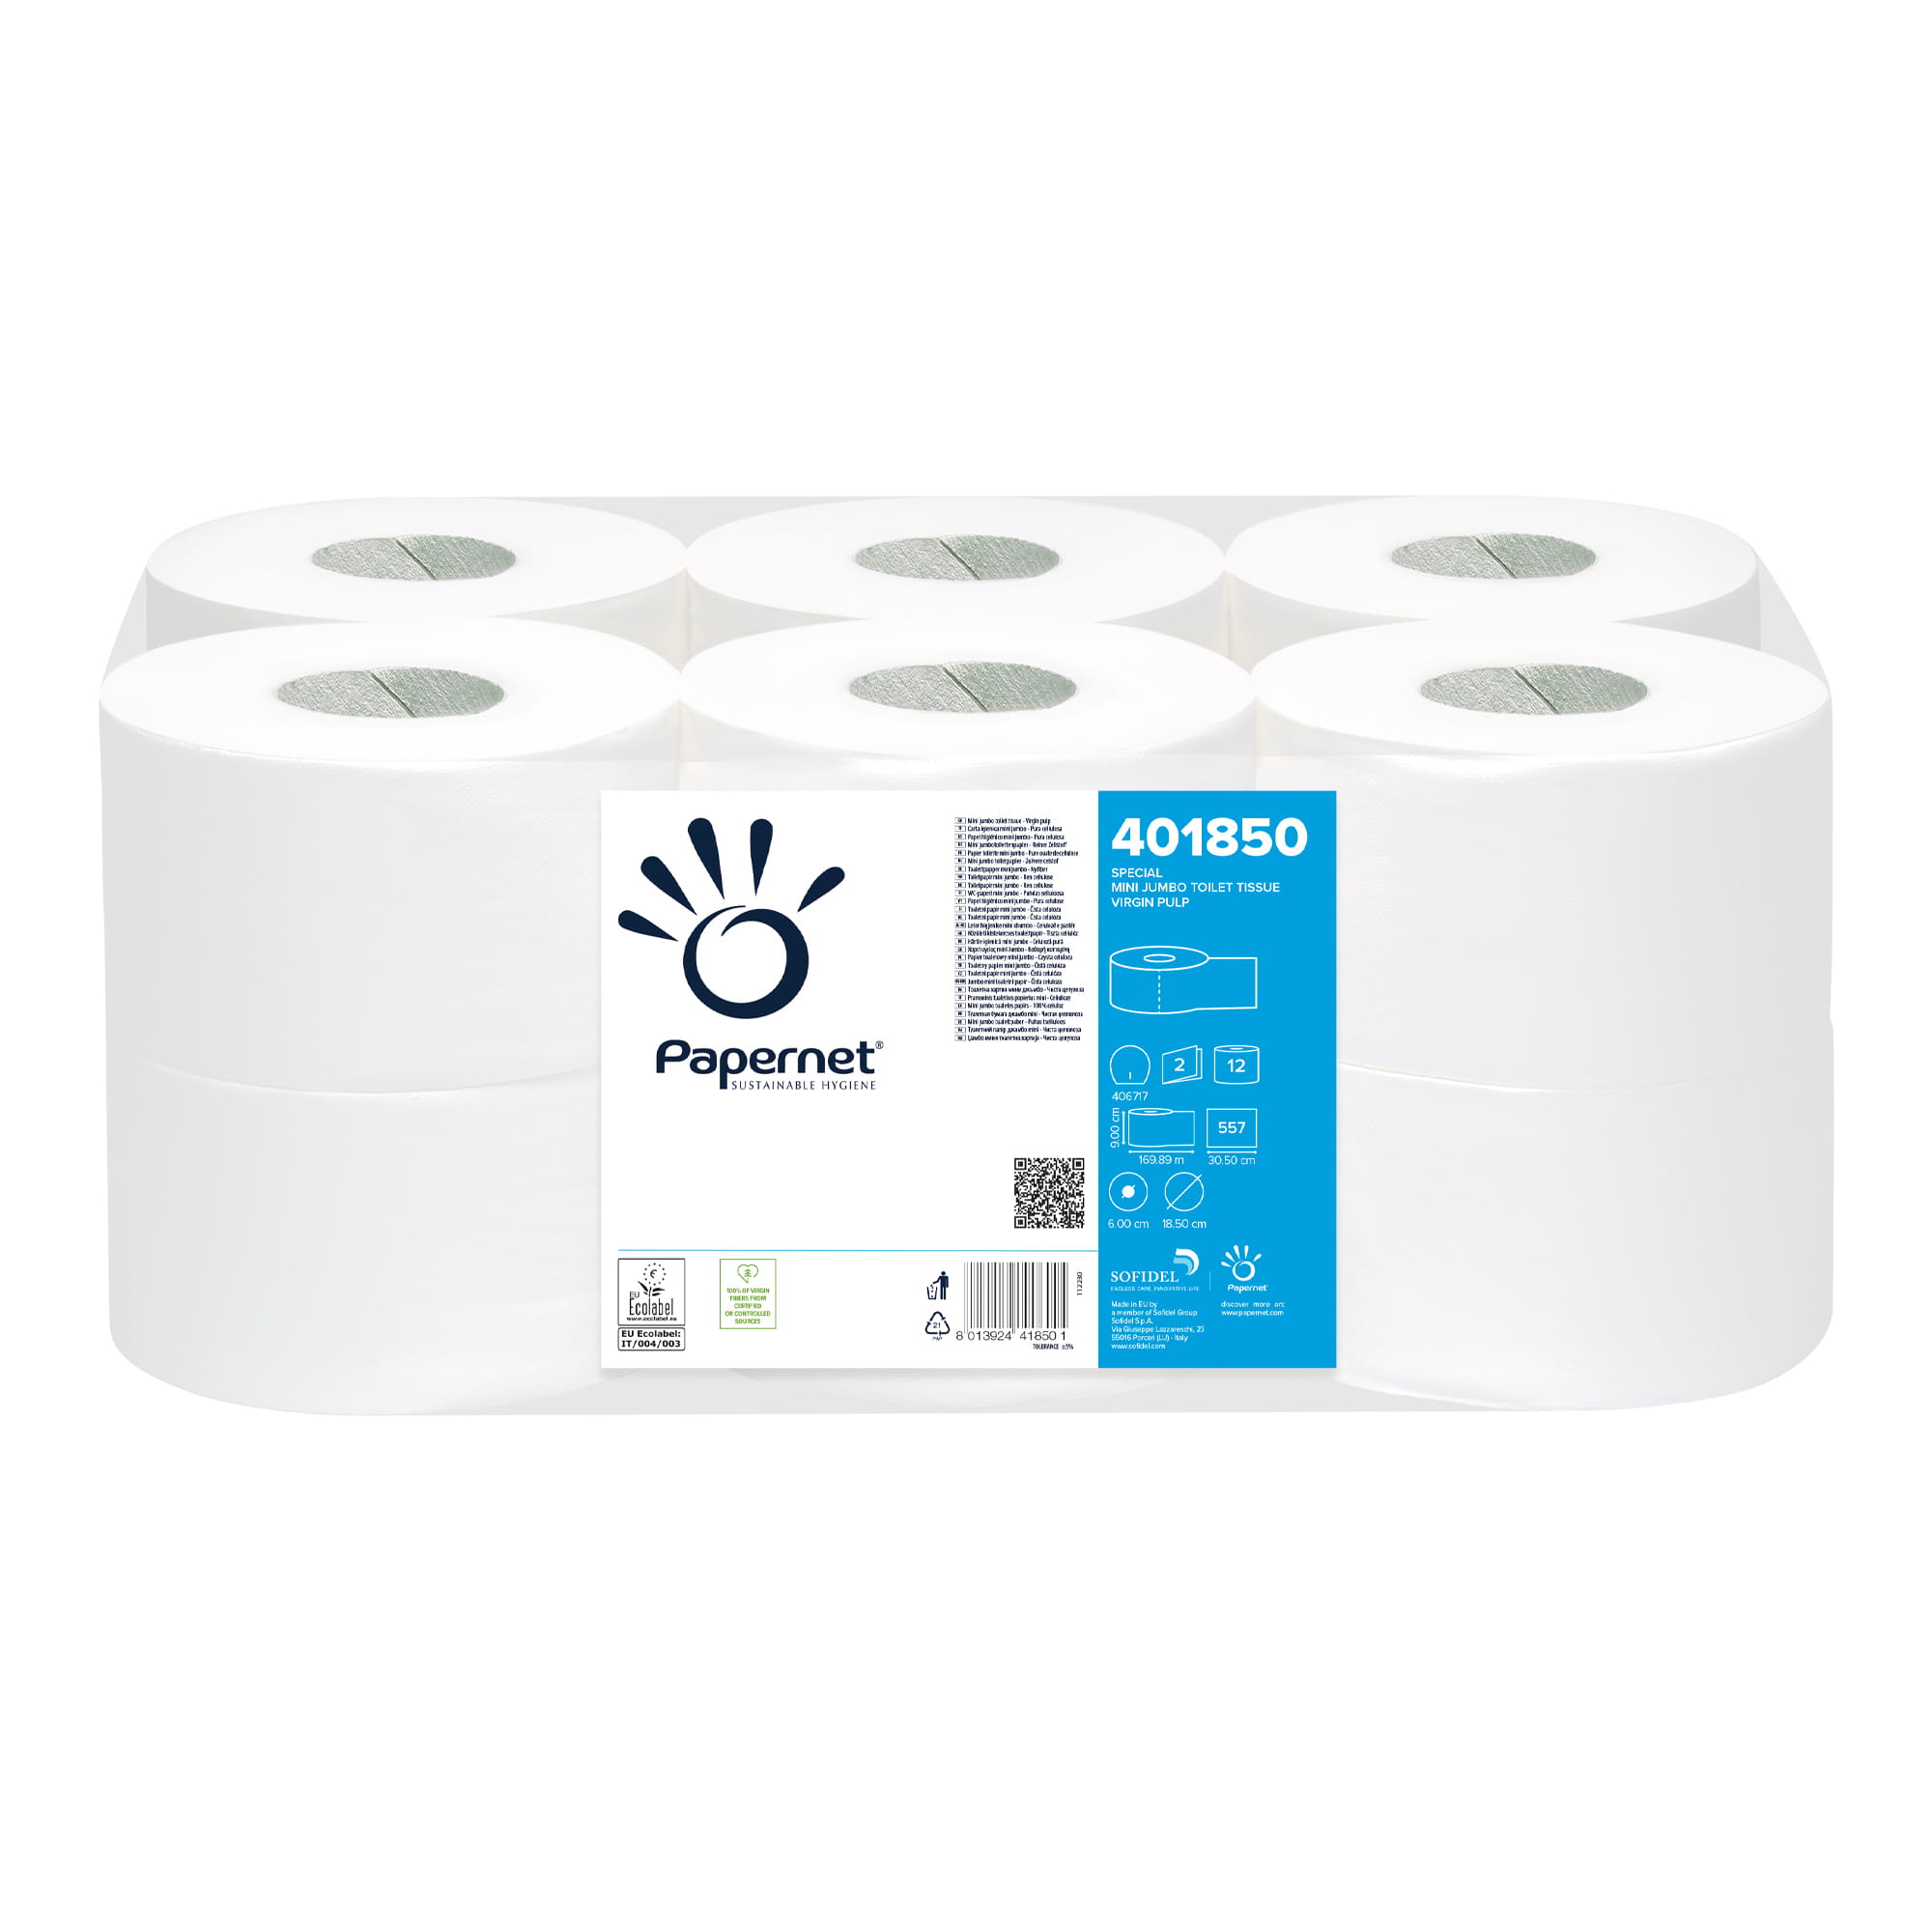 Papernet Toilettenpapier Mini Jumborolle weiß, 2-lagig, 170 Meter 12 Rollen 401850_1